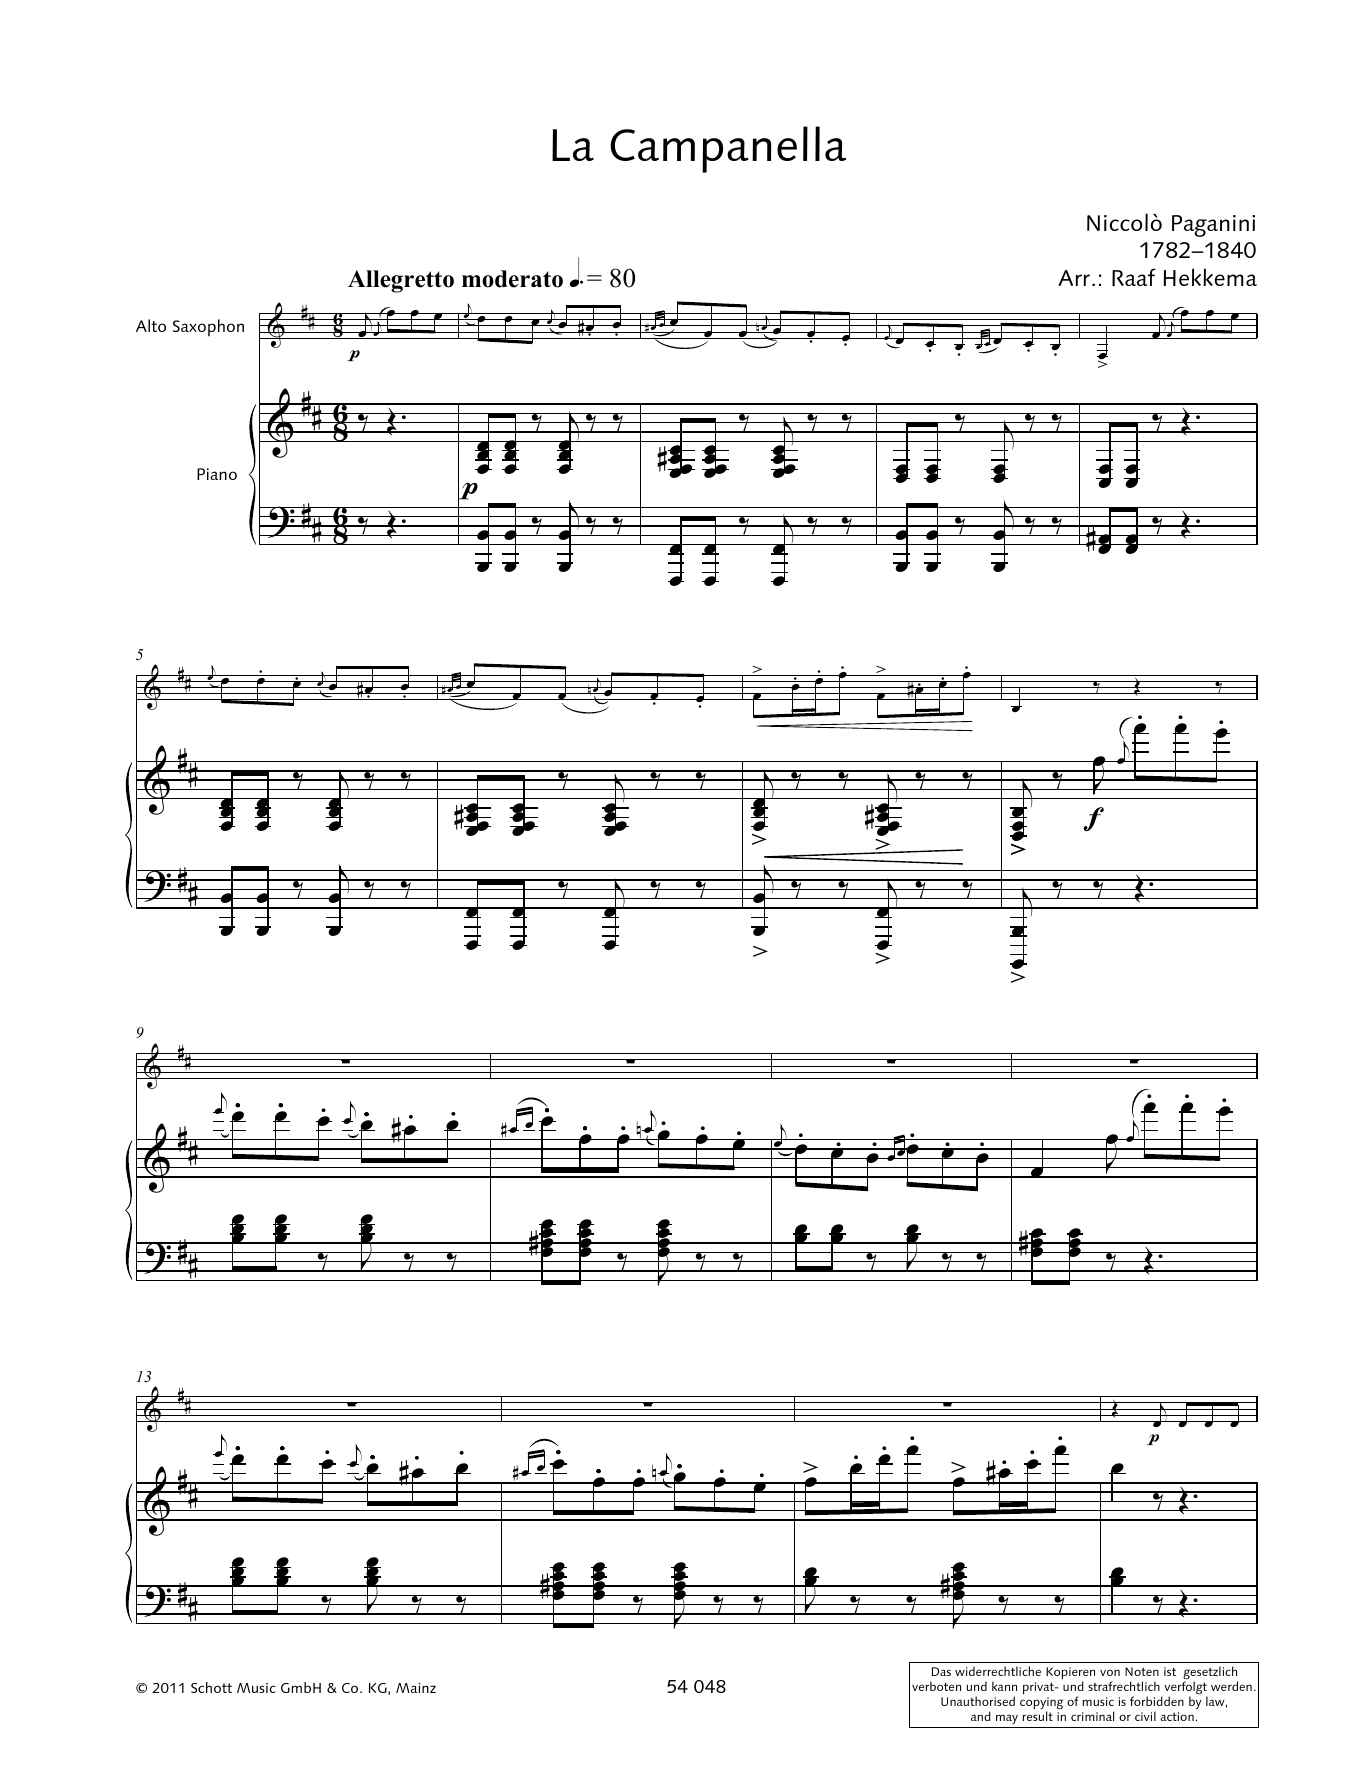 Download Niccolo Paganini La Campanella Sheet Music and learn how to play Woodwind Solo PDF digital score in minutes